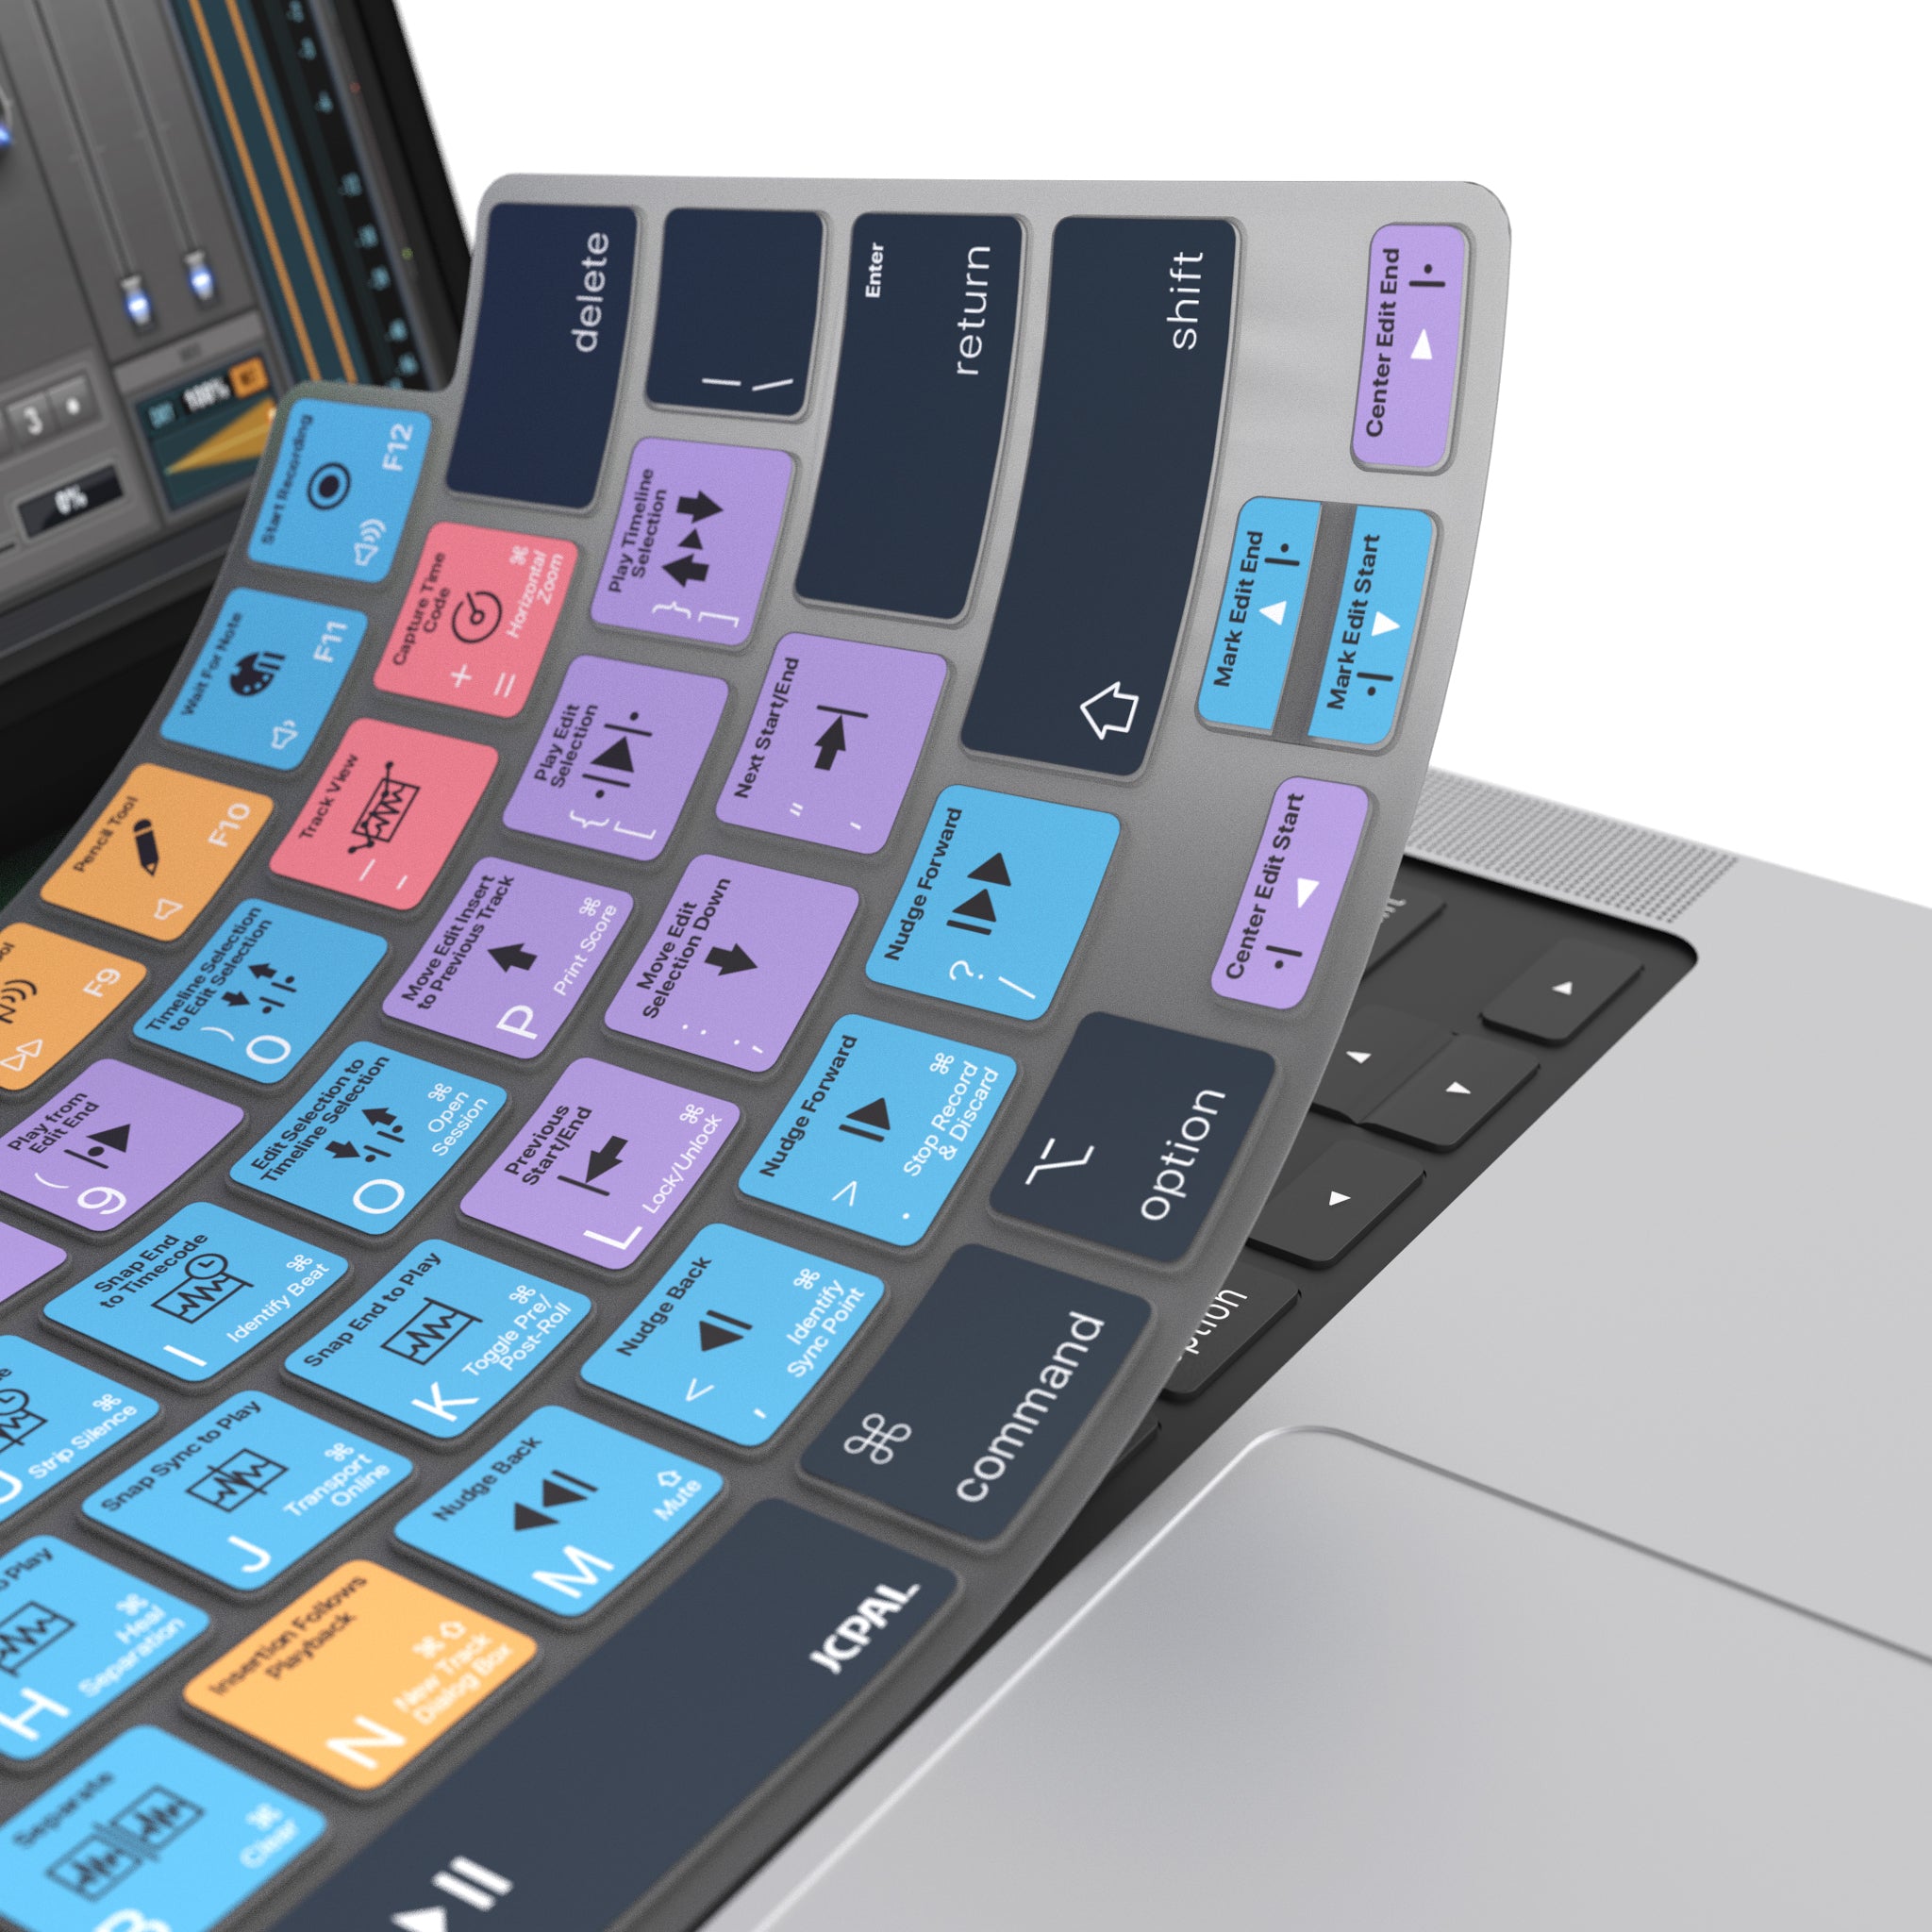 VerSkin   Avid Pro Tools Shortcut Keyboard Protector